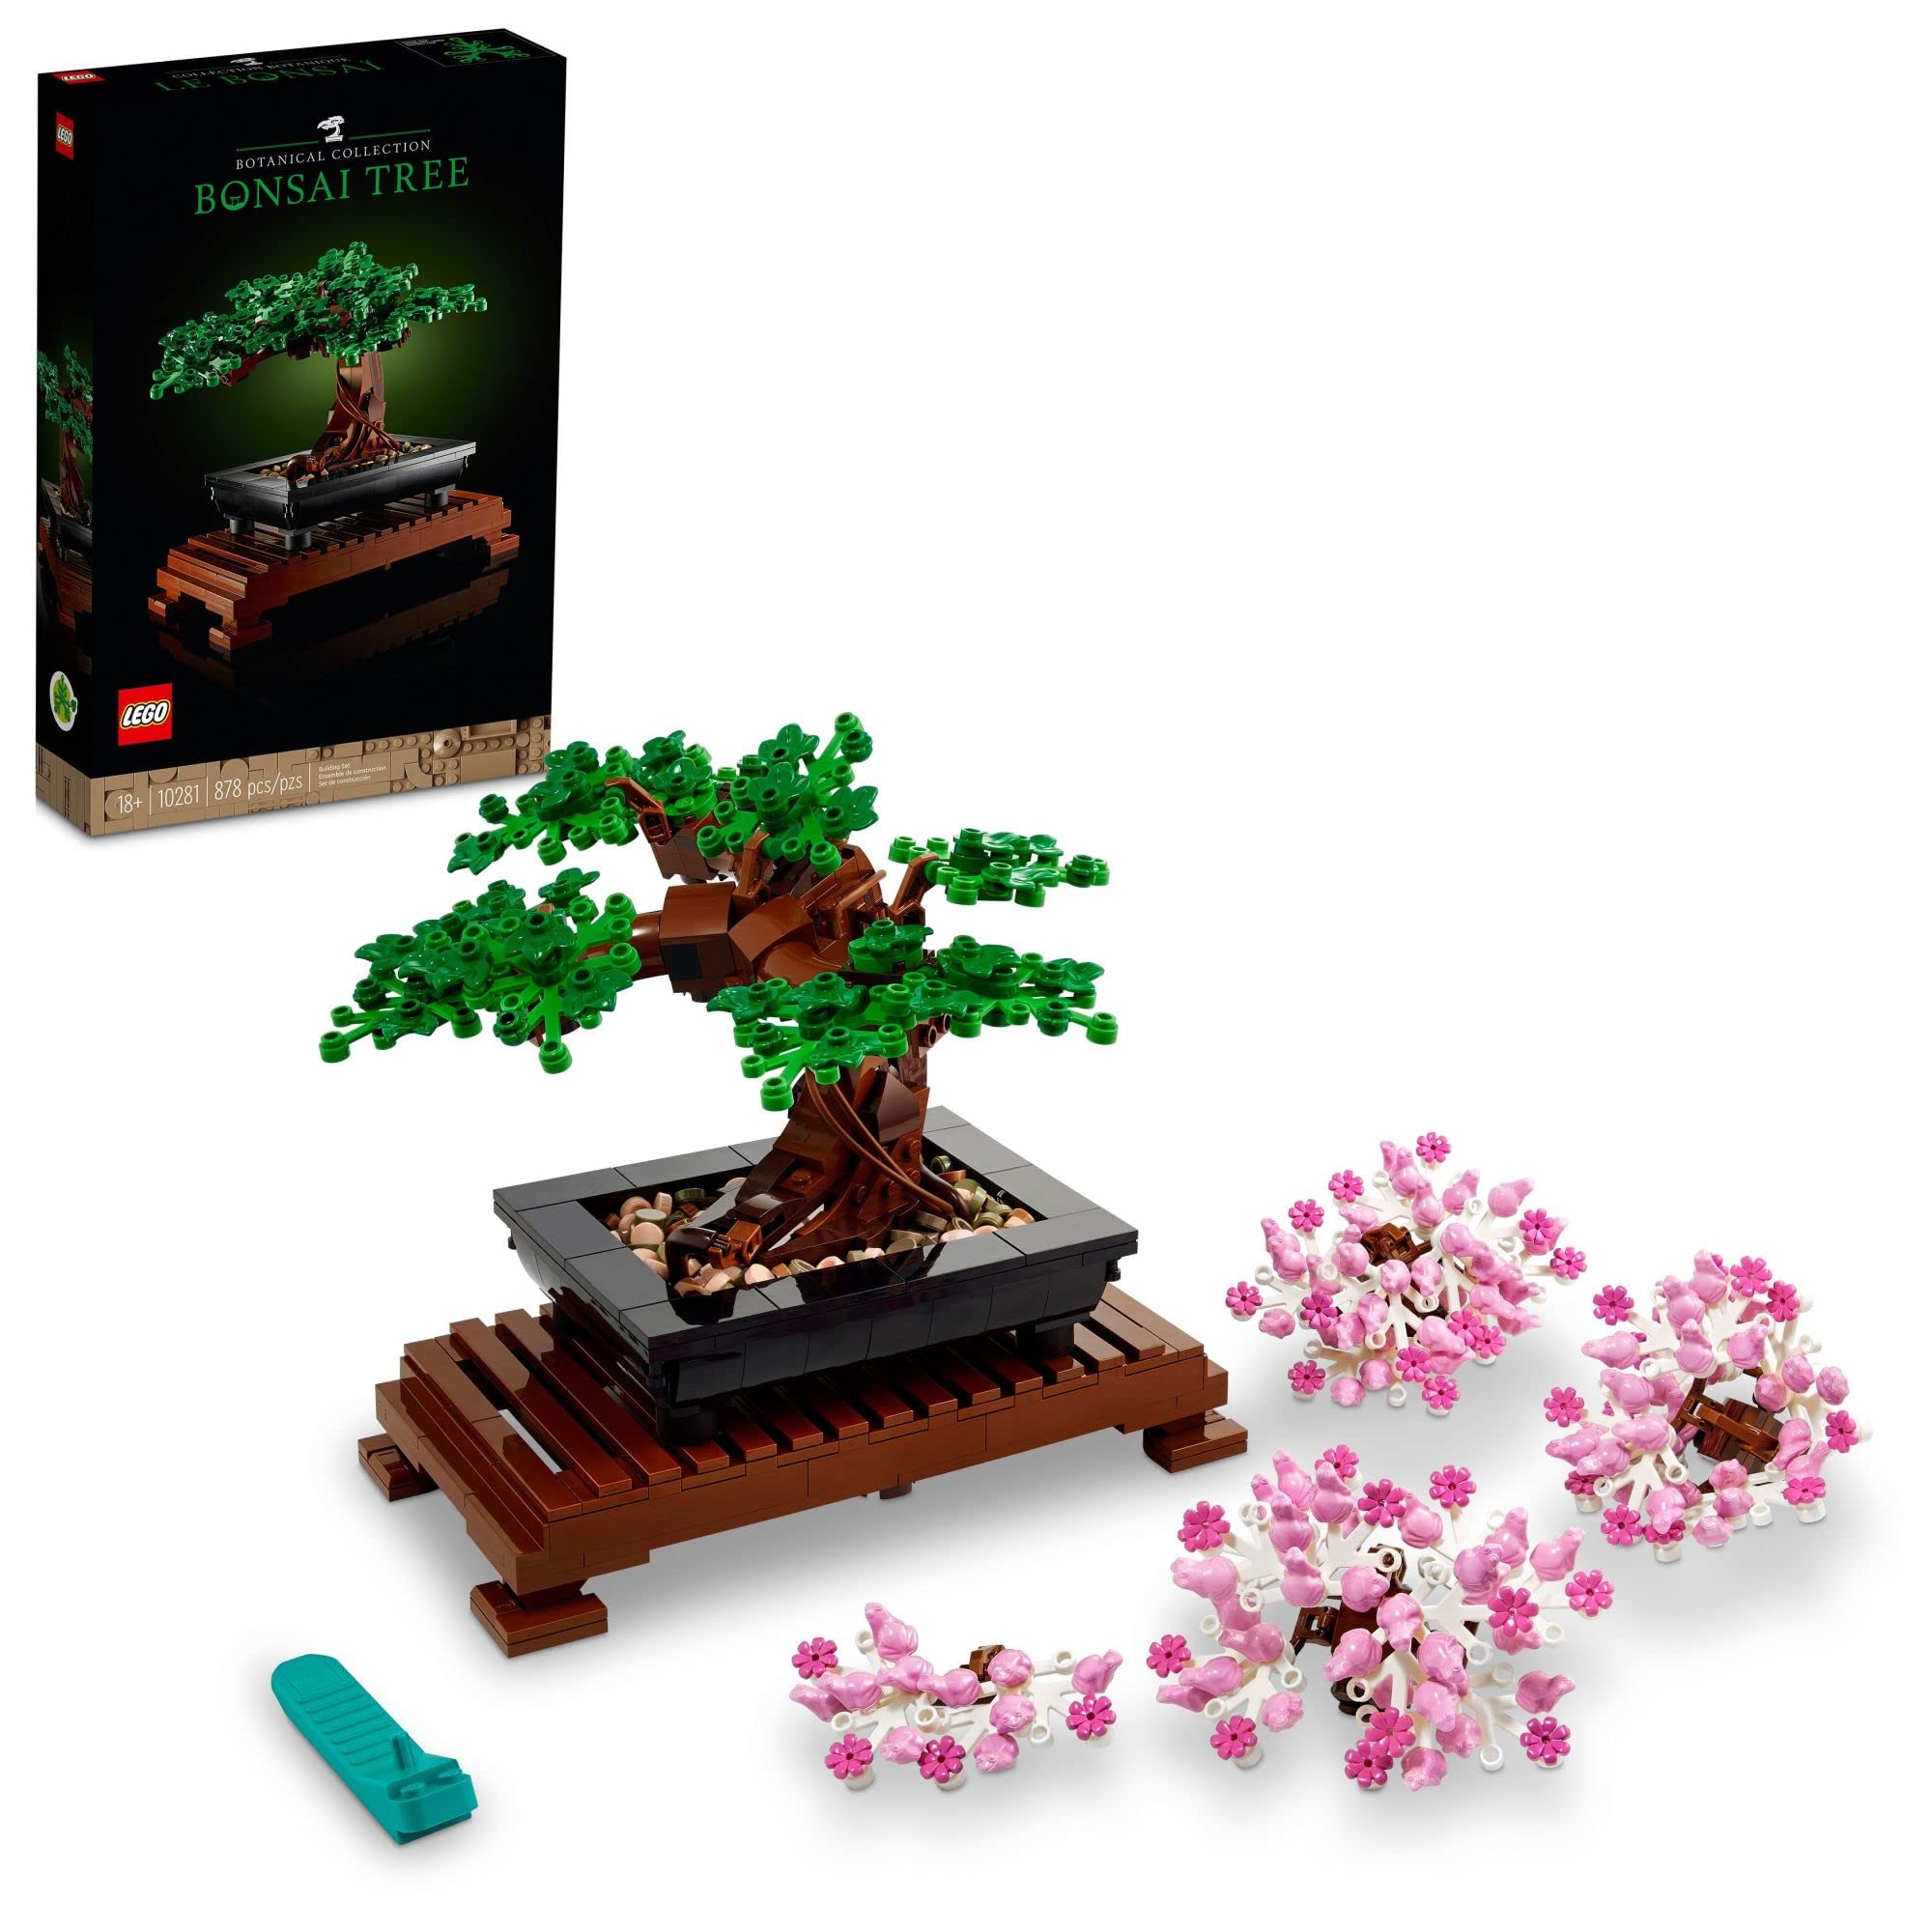 878-Piece LEGO Bonsai Tree Building Kit (10281) $39.99 + Free Shipping